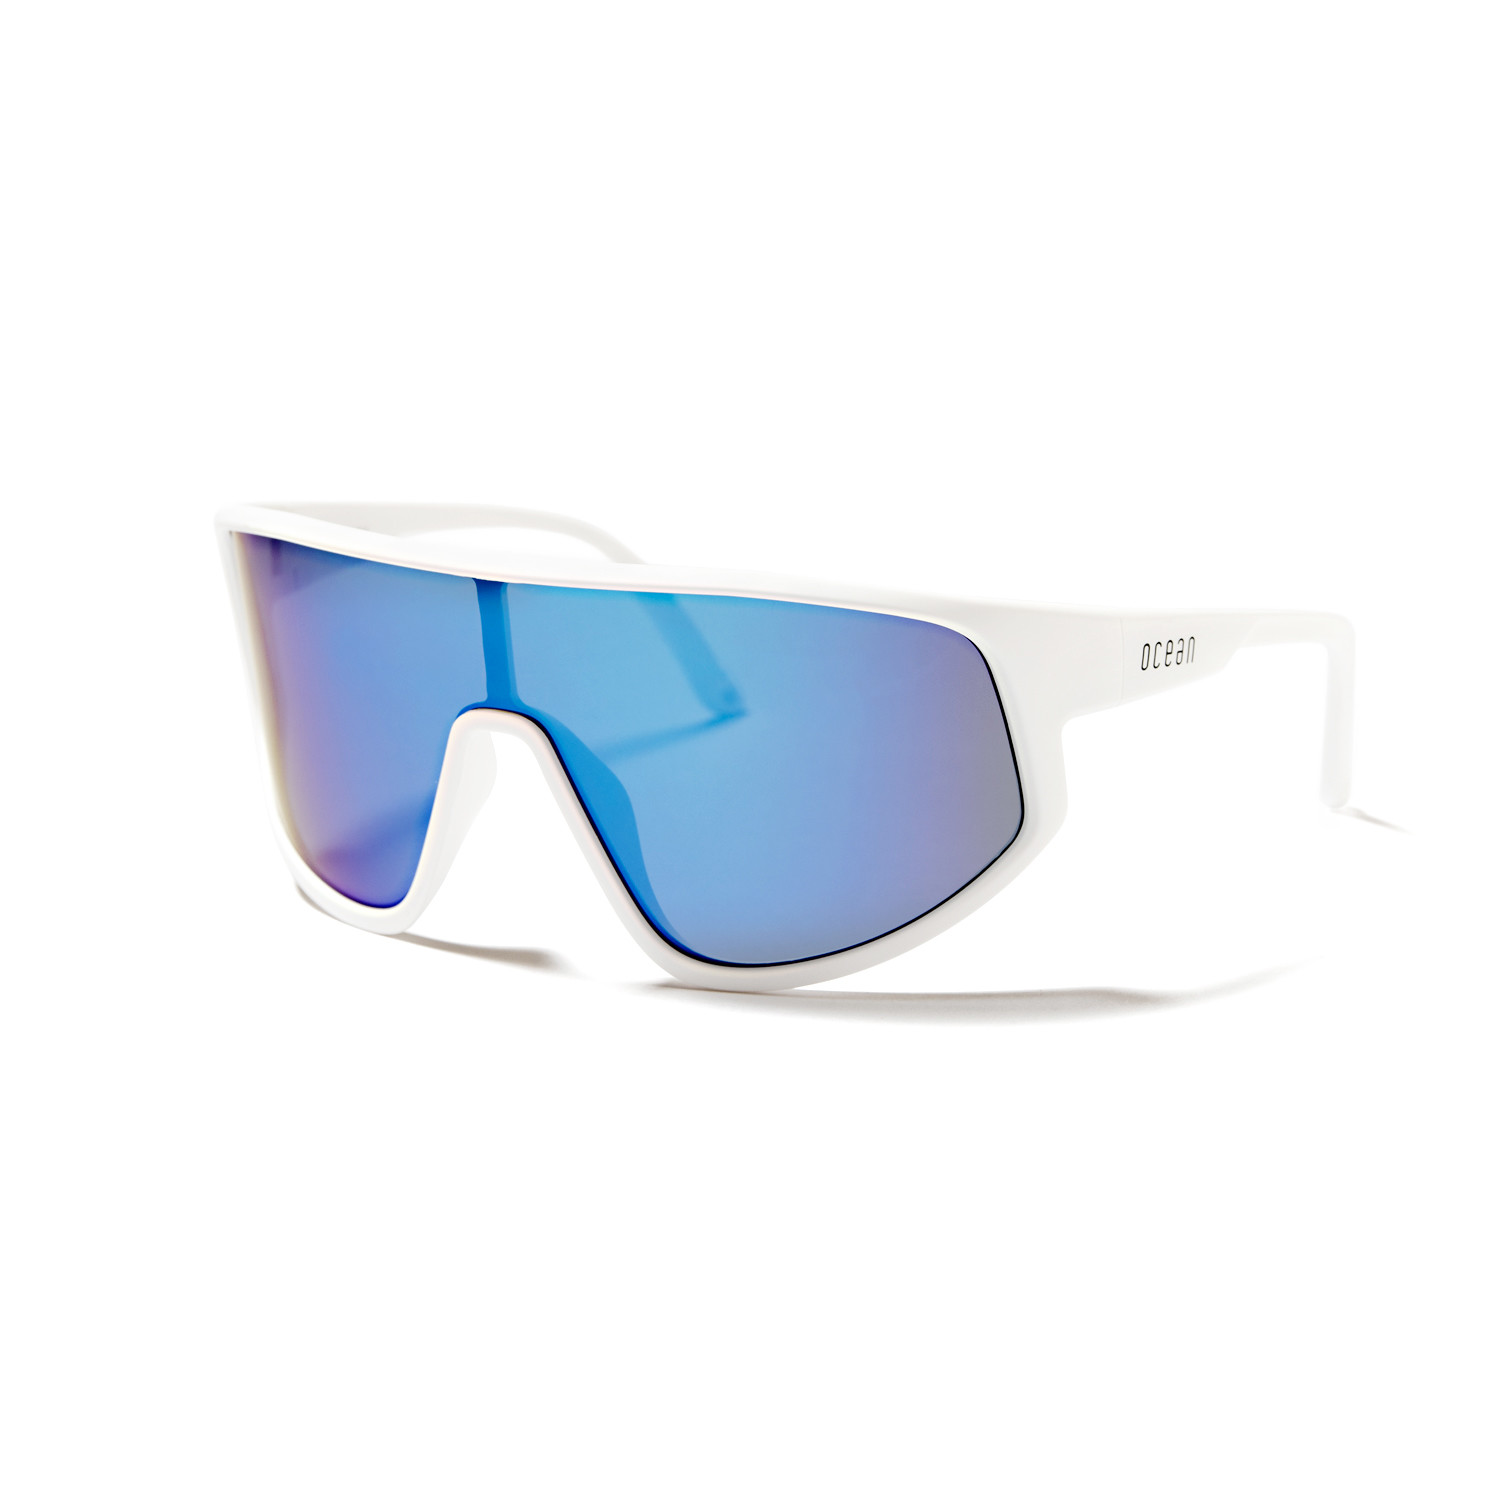 KILLY Sport Glasses (Shiny Black Frame with Smoke Lens) - Ocean ...